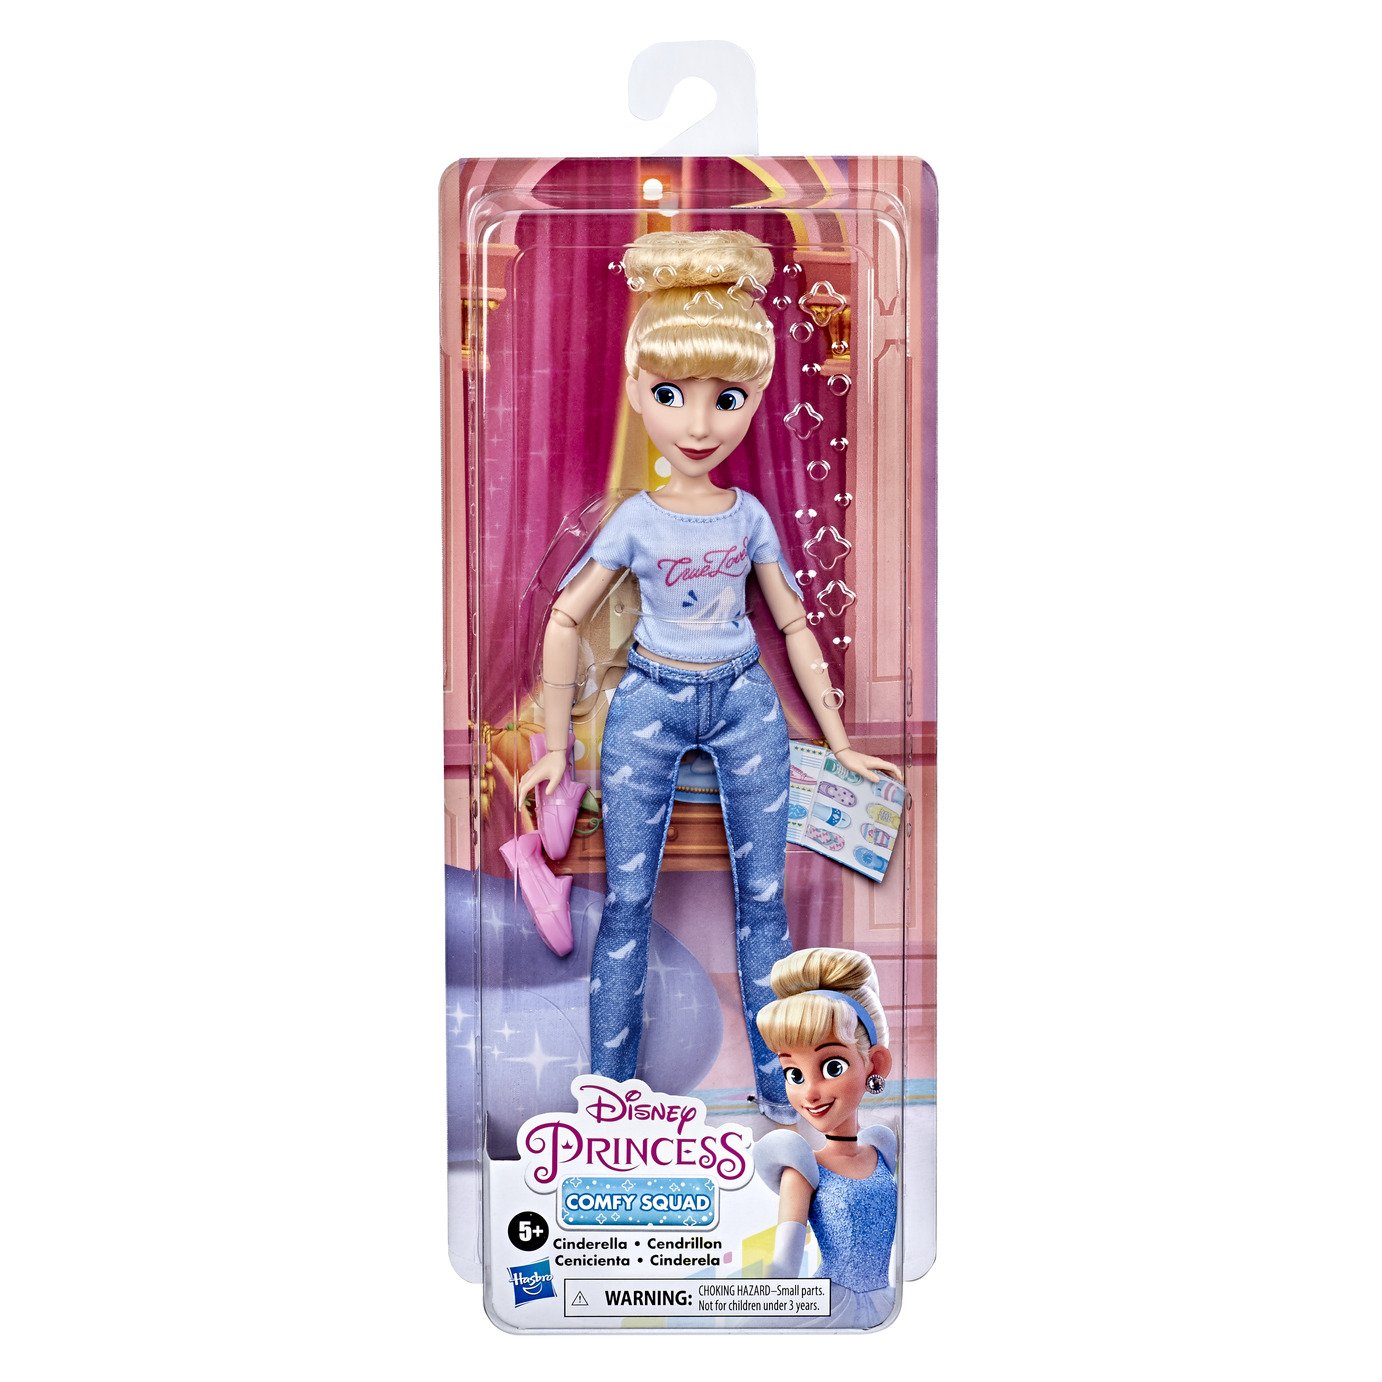 Disney Princess Comfy Squad Cinderella Review